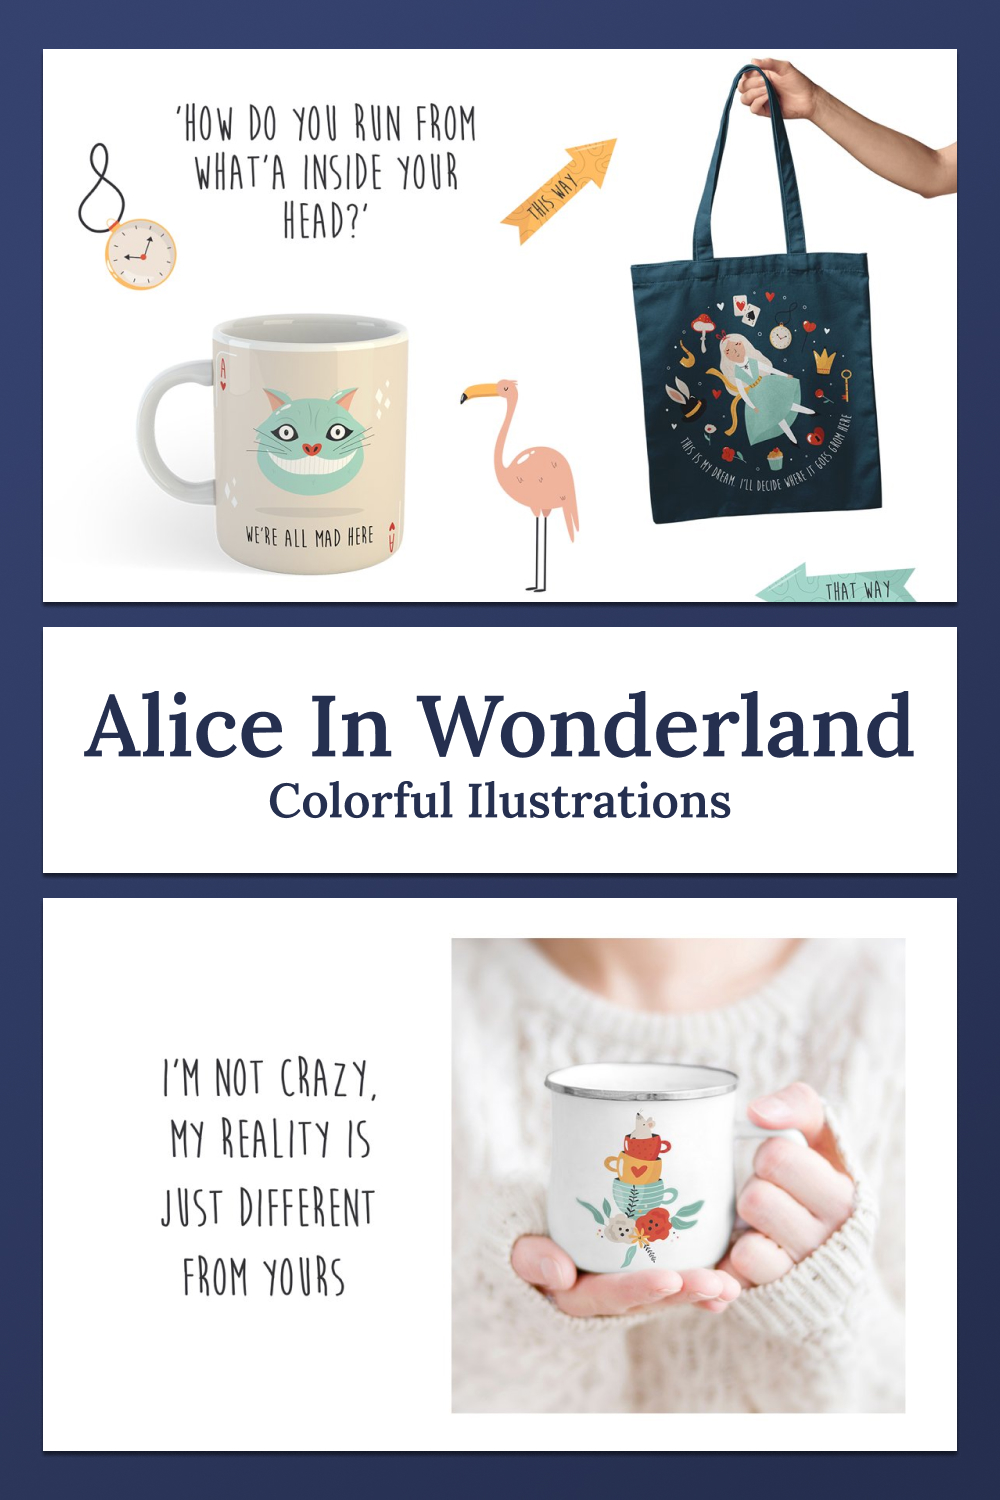 Alice in wonderland colorful ilustrations of pinterest.